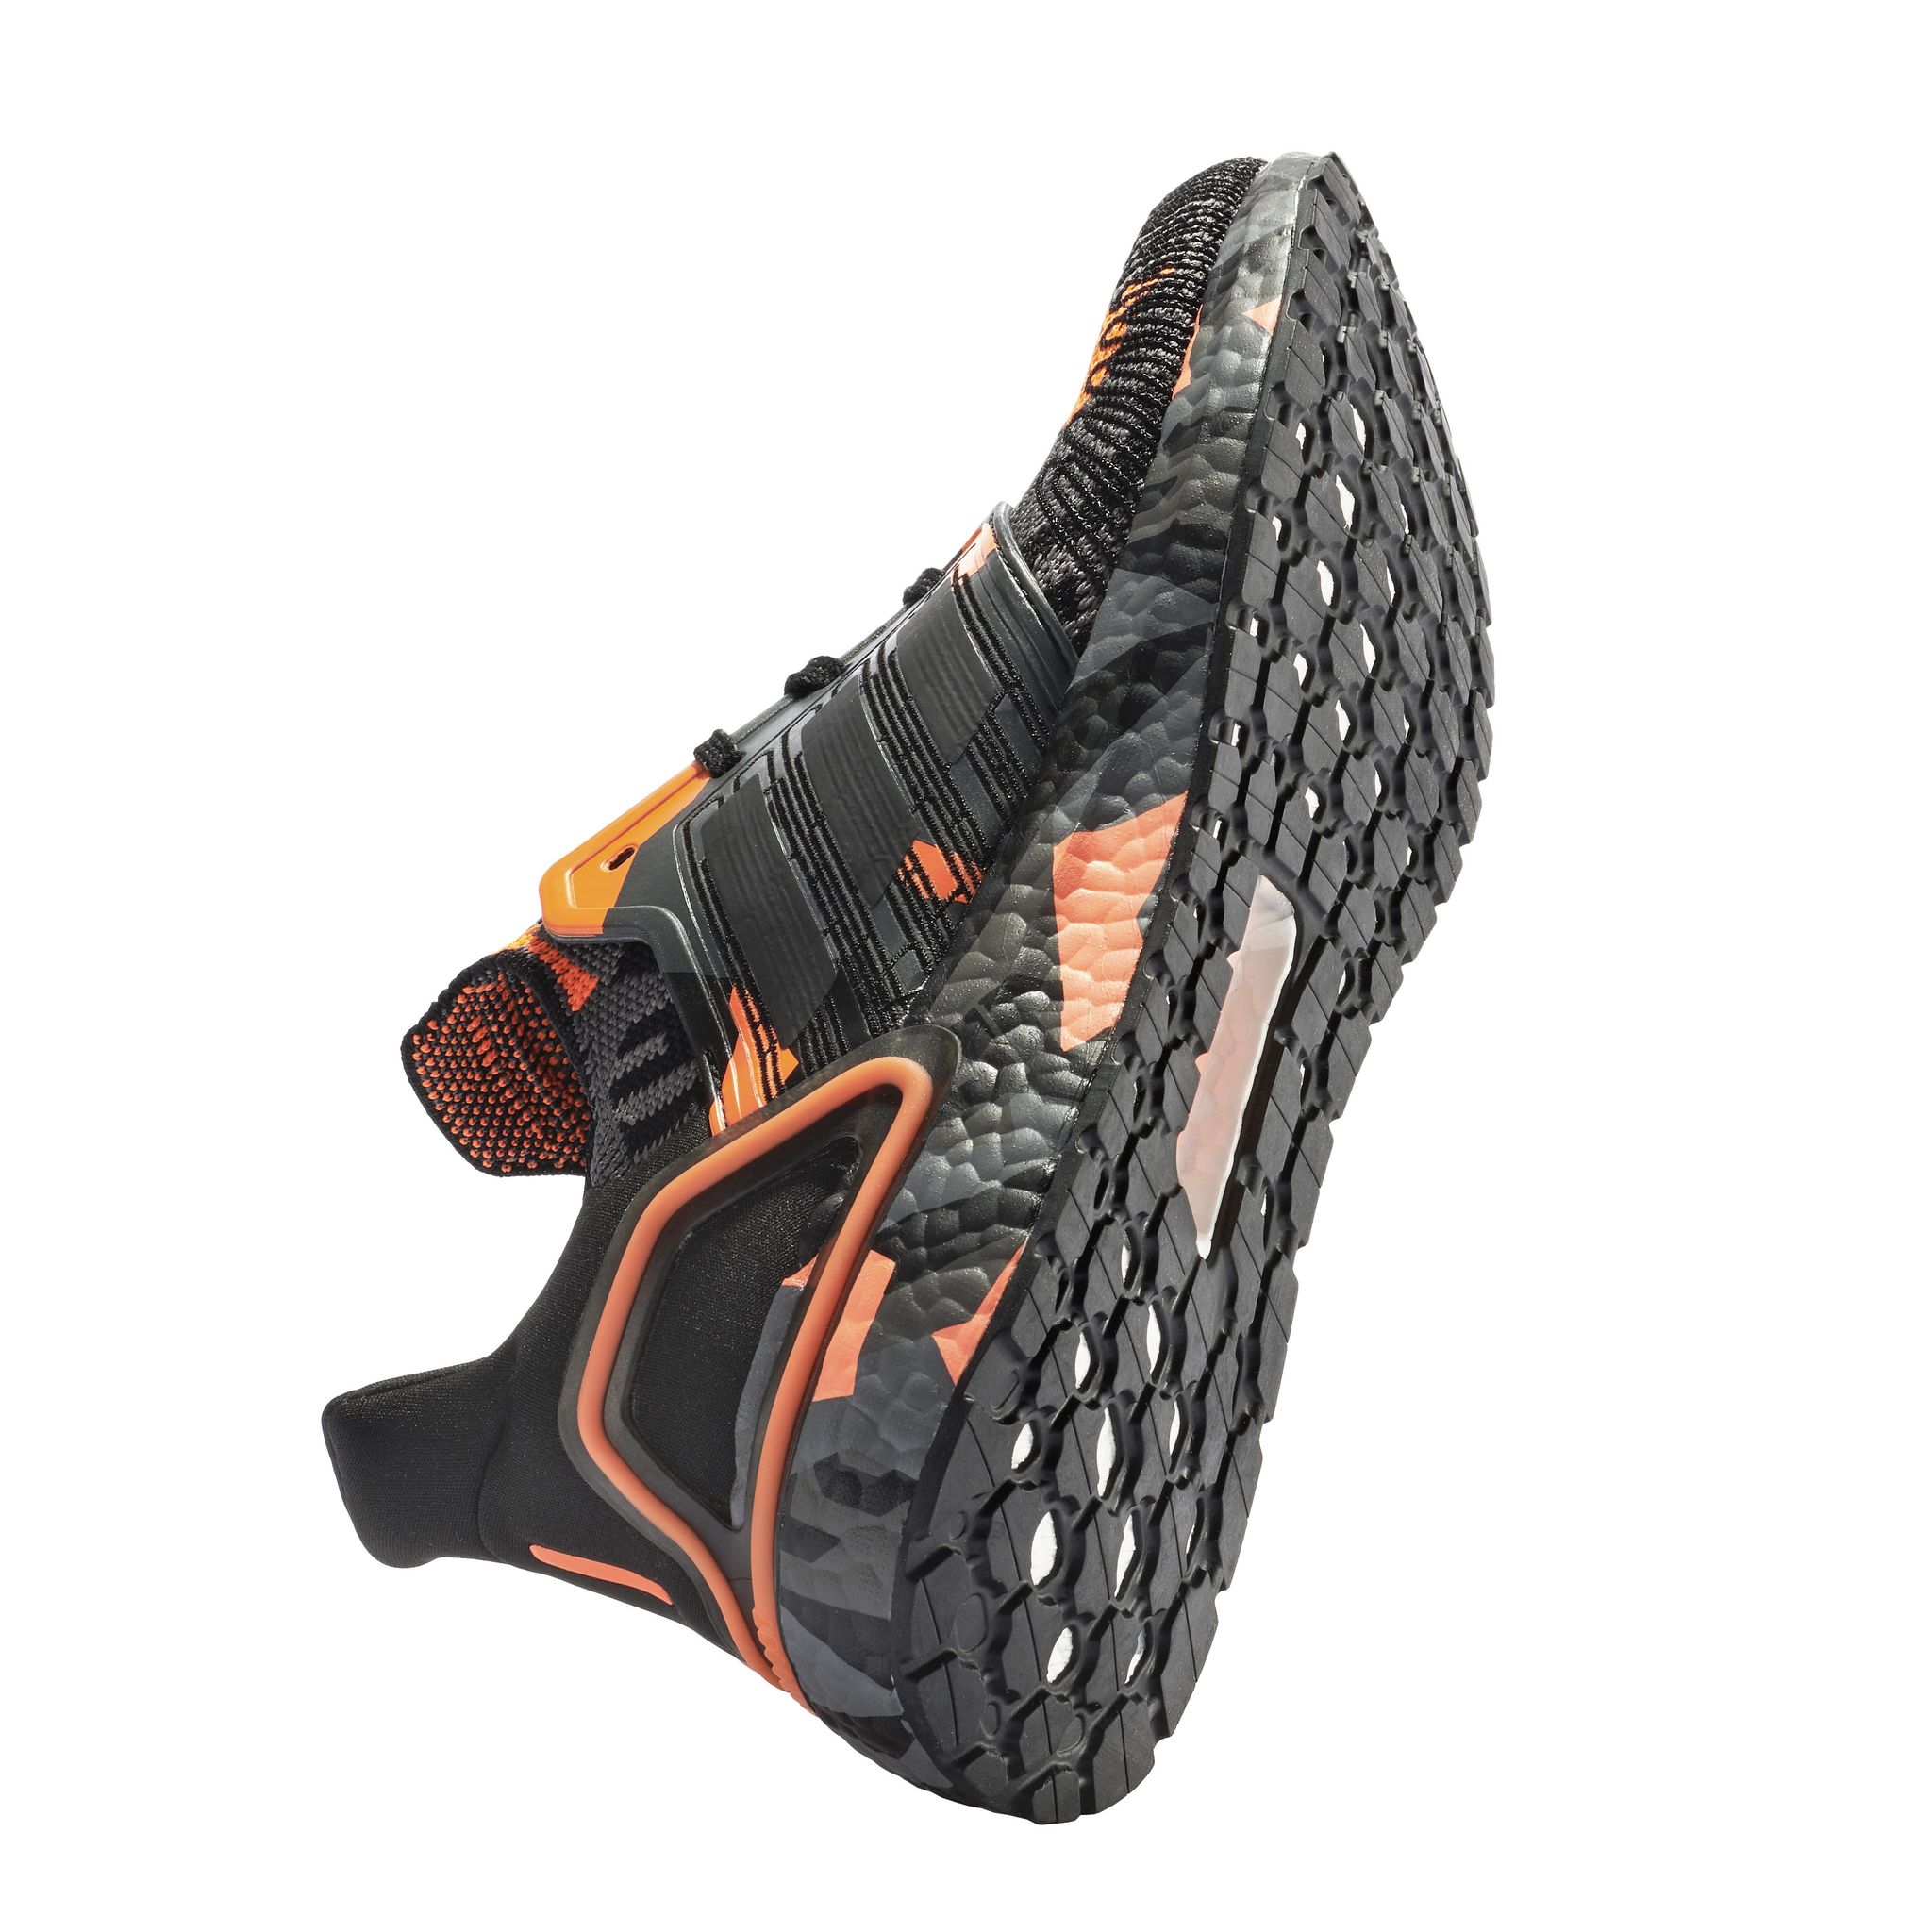 Es una suerte que Derrotado Abandonar Best running shoes 2020 - Adidas Ultraboost 20